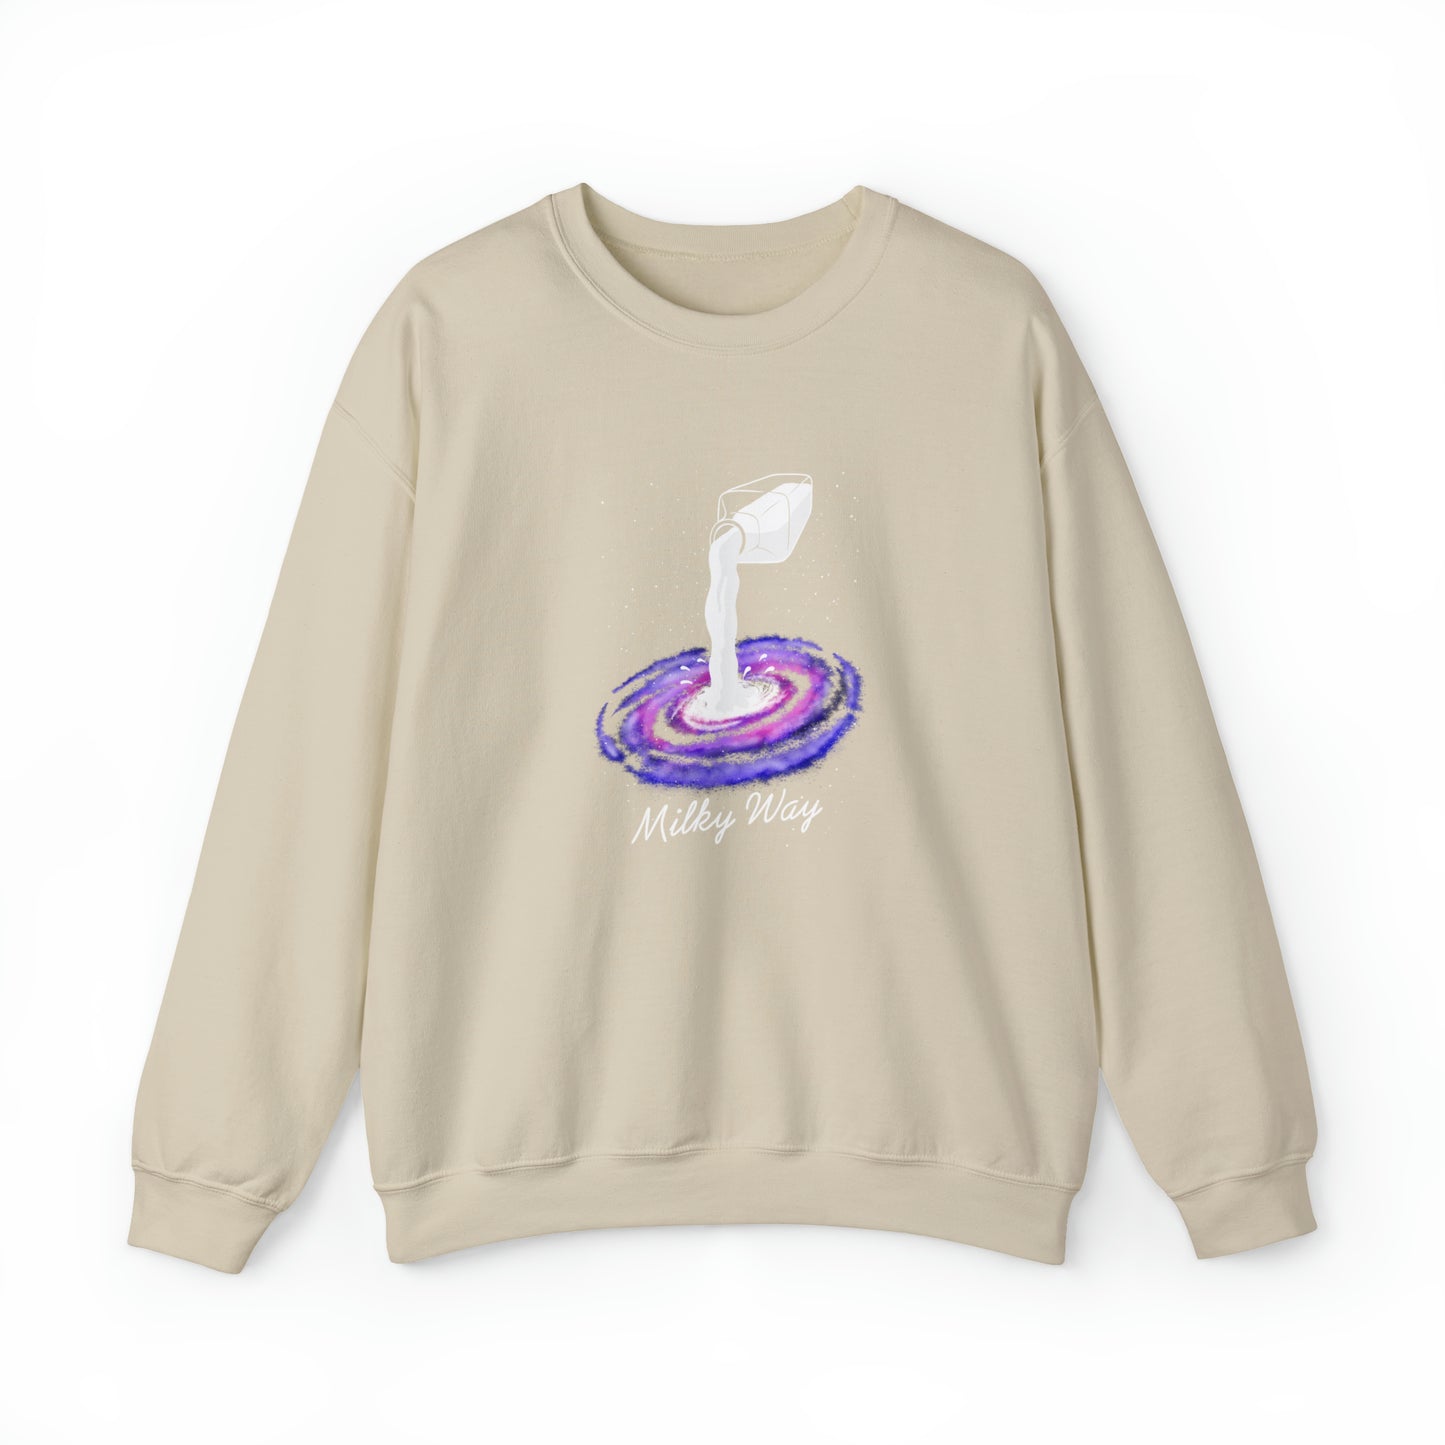 Custom Parody Crewneck Sweatshirt, Milky Way Design